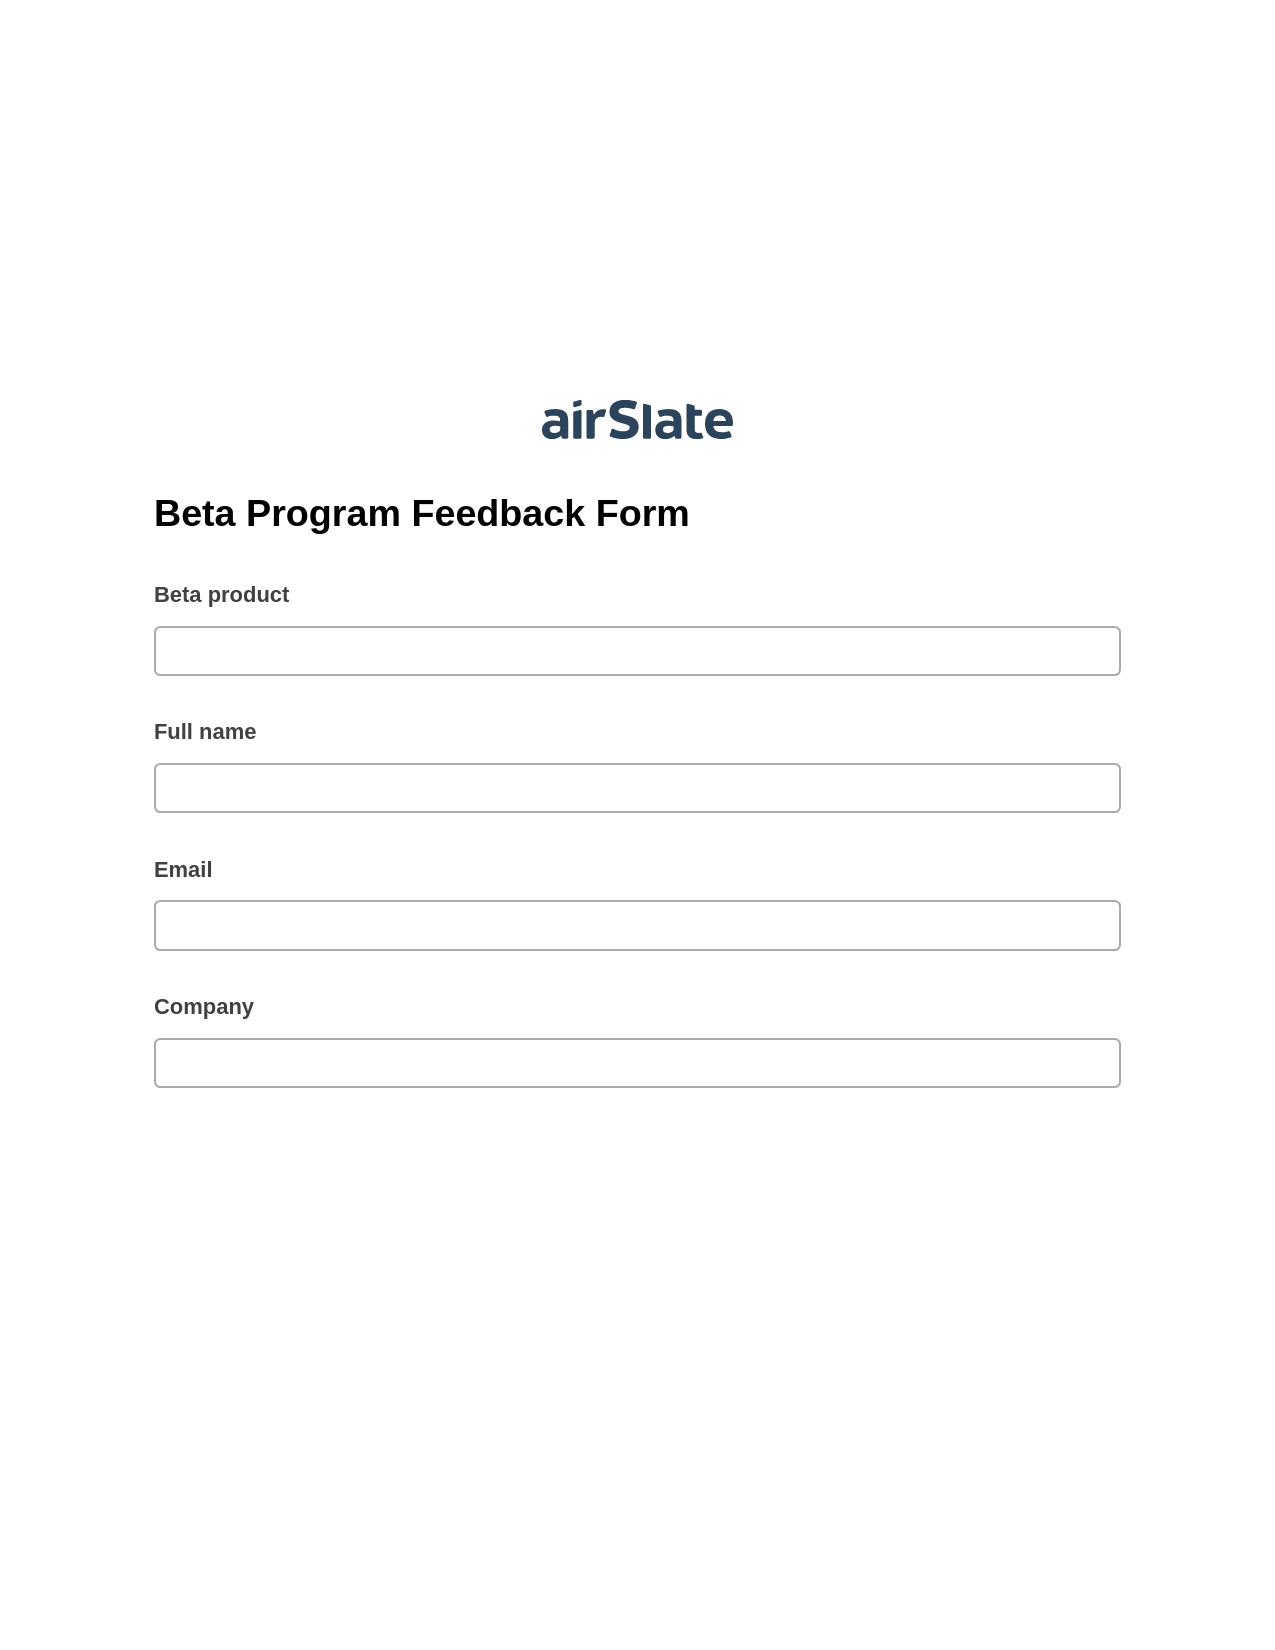 Multirole Beta Program Feedback Form Pre-fill from Salesforce Record Bot, Google Calendar Bot, Post-finish Document Bot